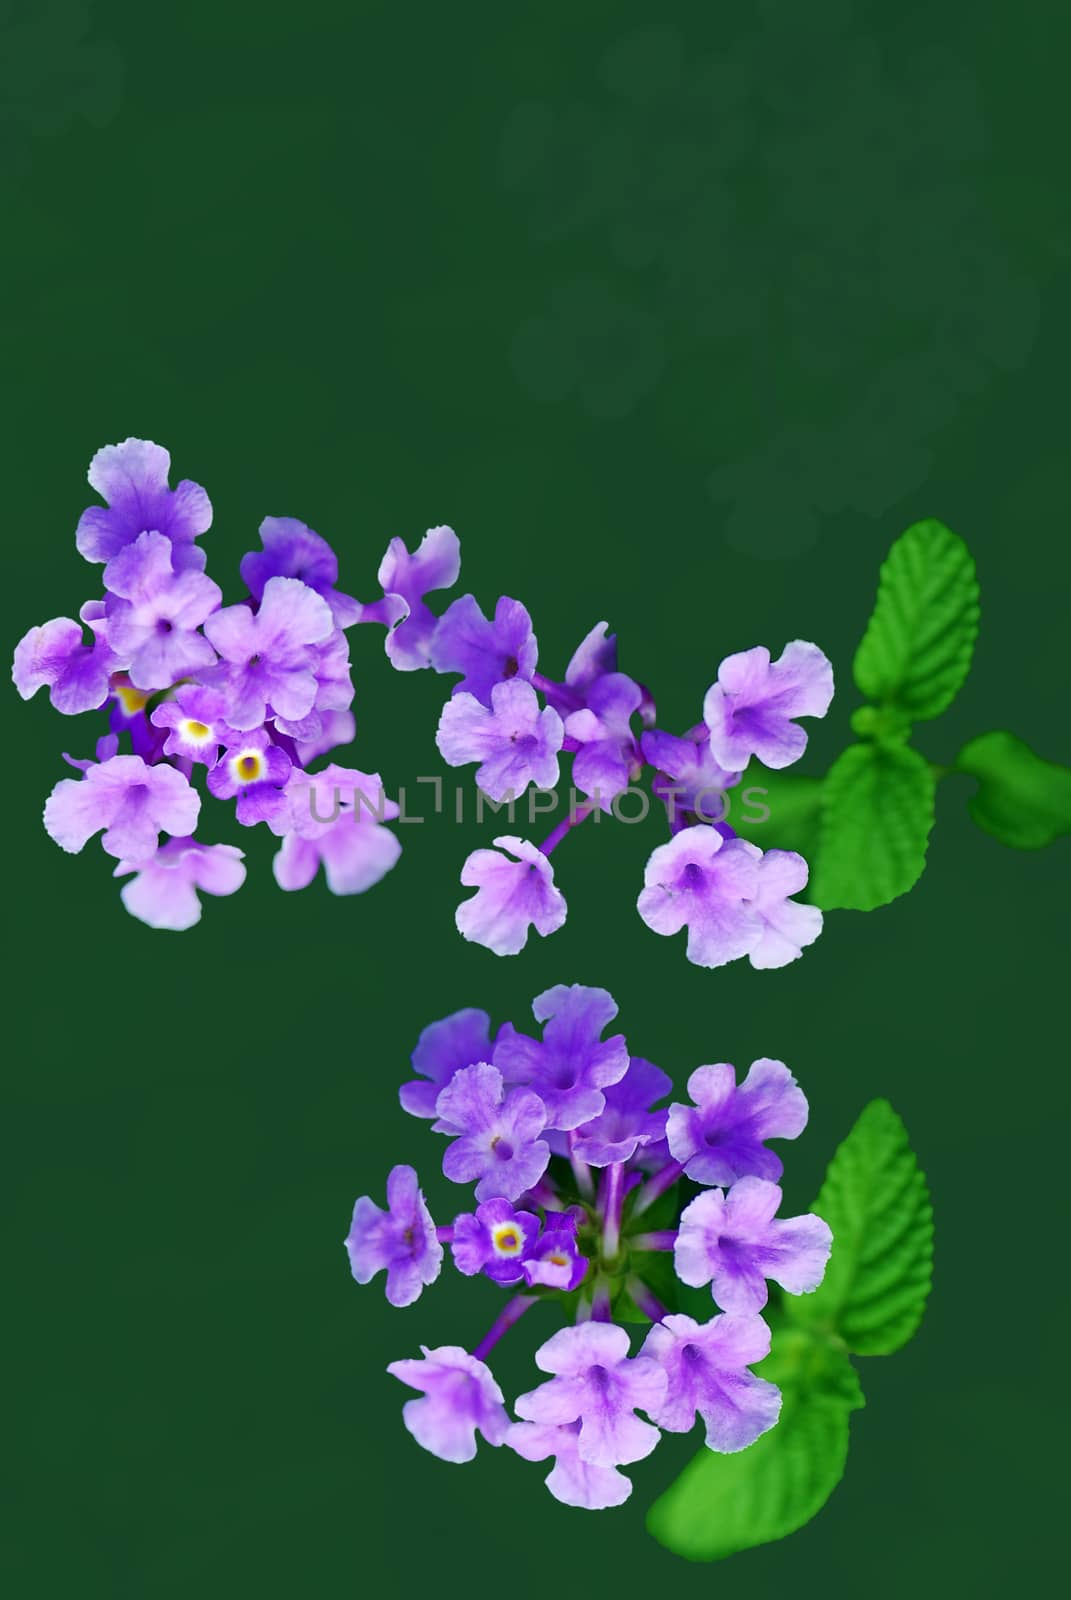 The scientific name of the Common Lantana flower is Lantana montevidensis